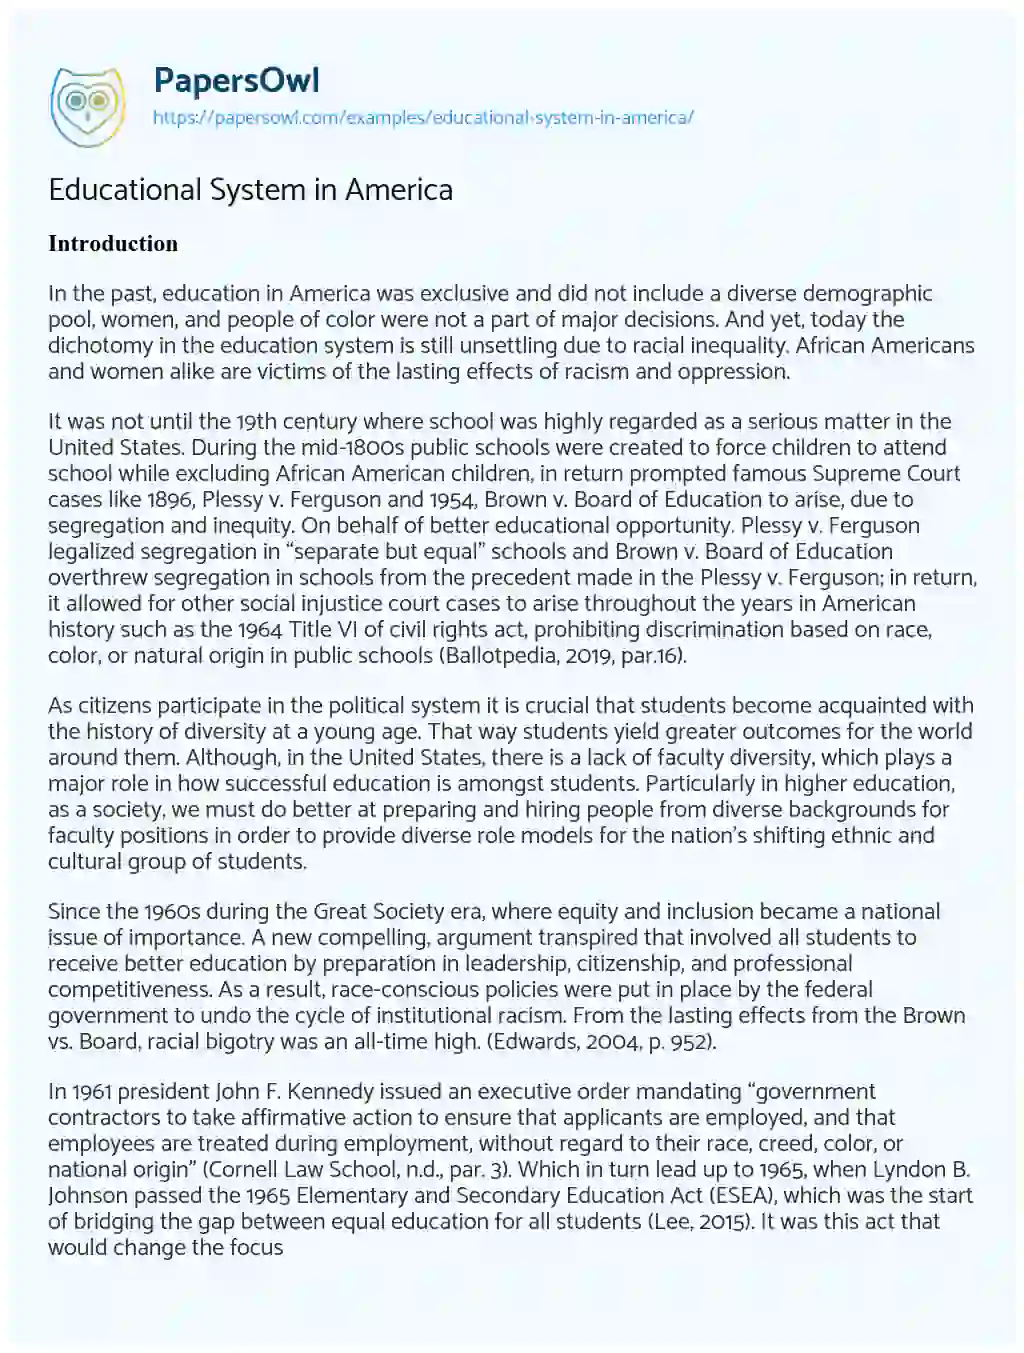 Educational System in America essay